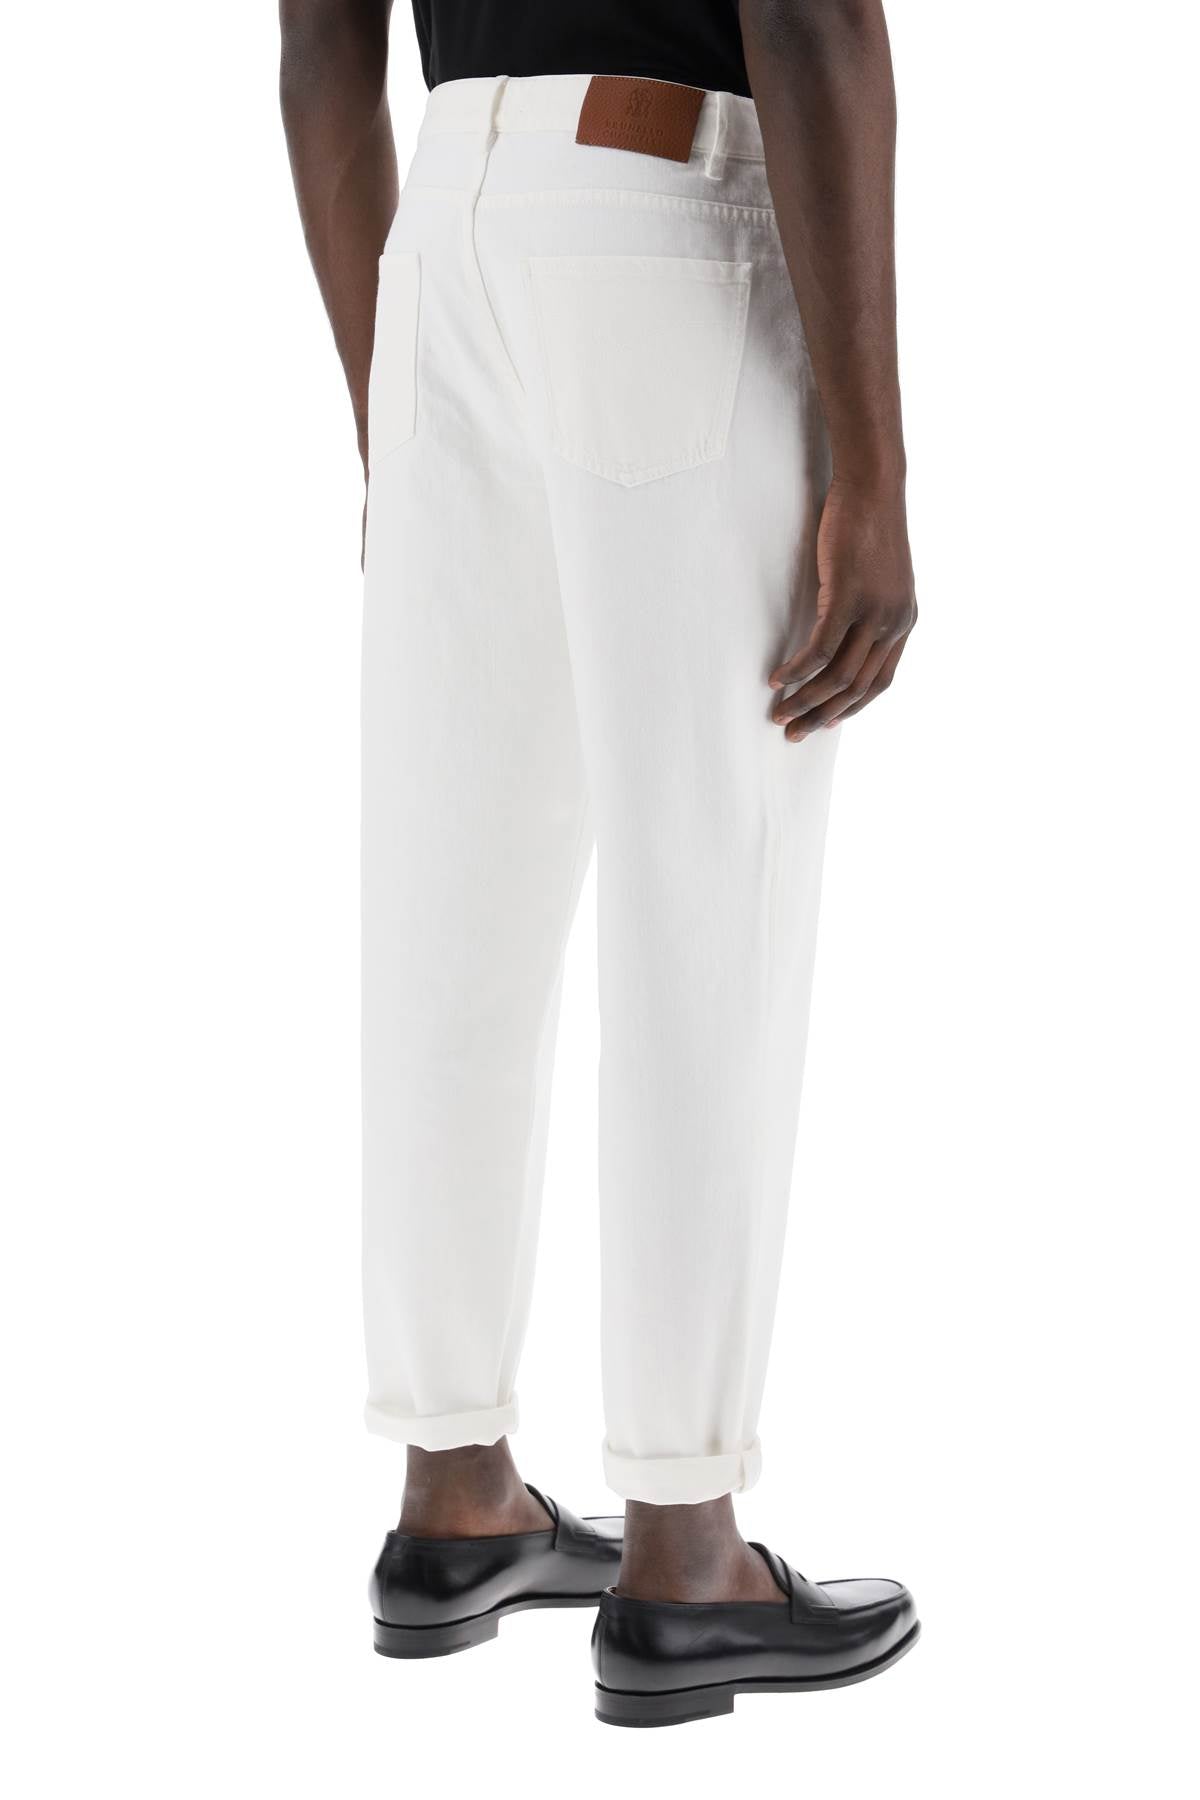 Shop Brunello Cucinelli Men's Overdyed Denim Jeans | Classic Five-pocket Design | Regular Fit | White